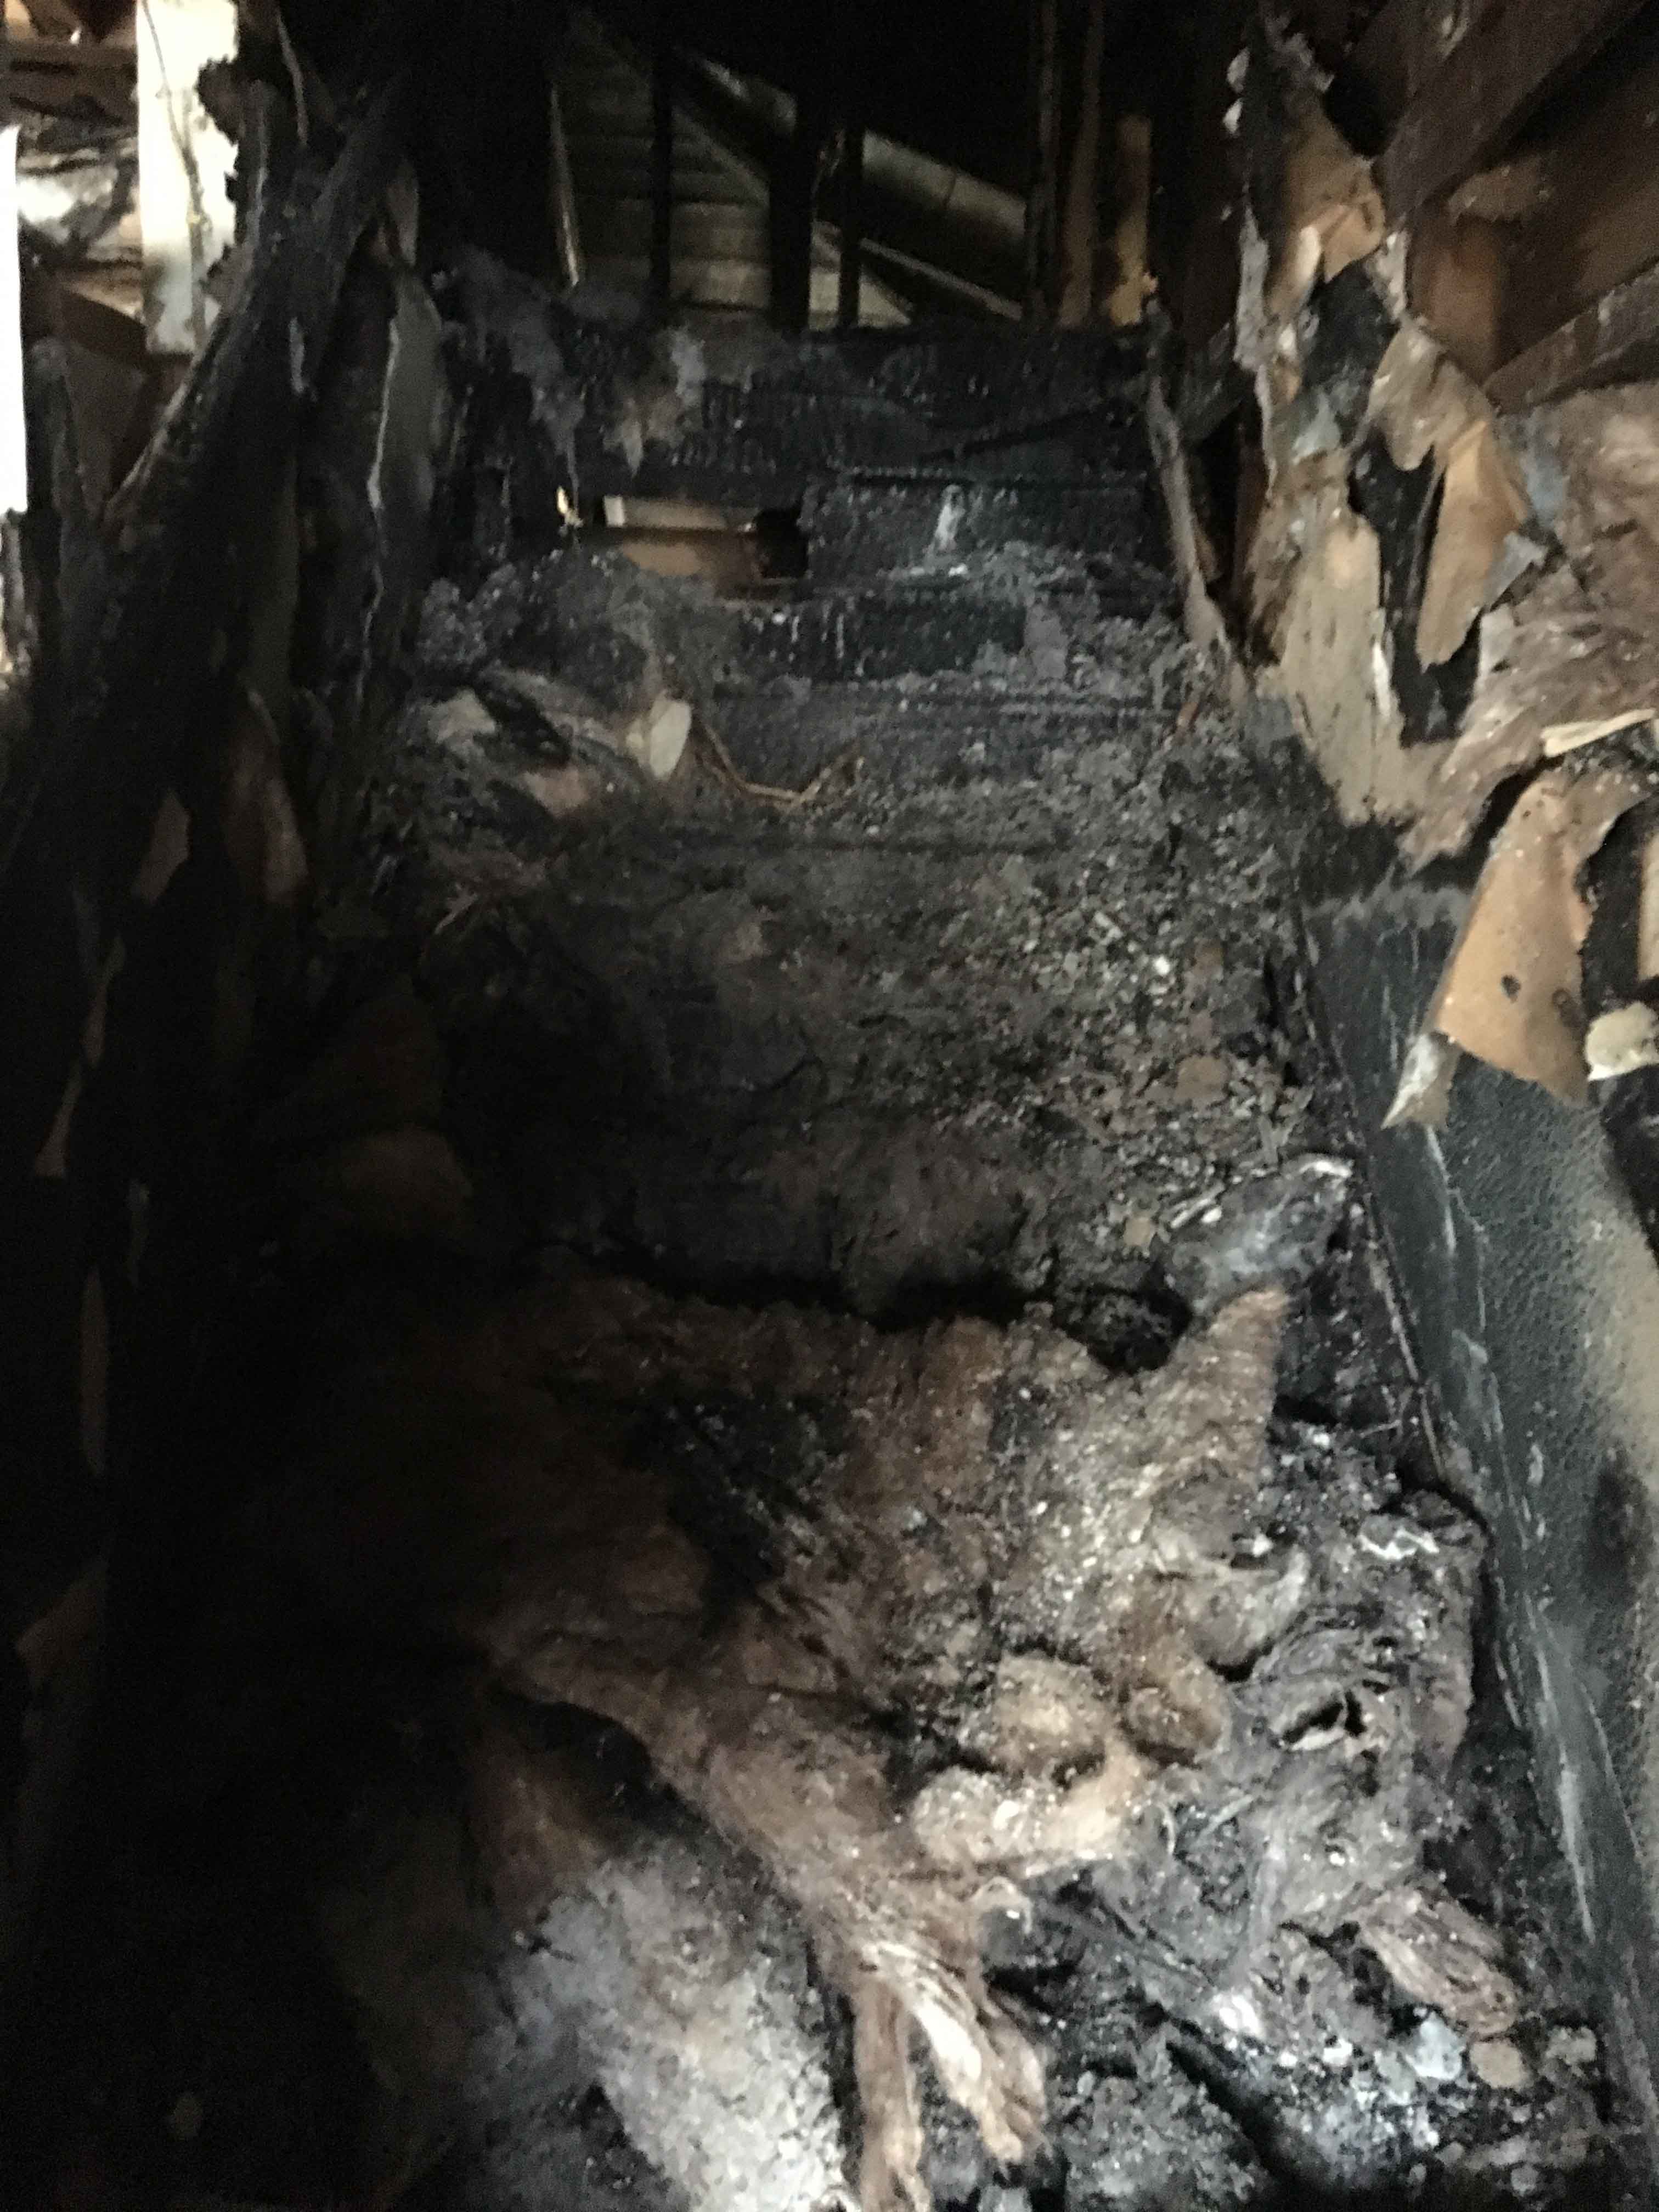 fire restoration companies in Jackson michigan USA